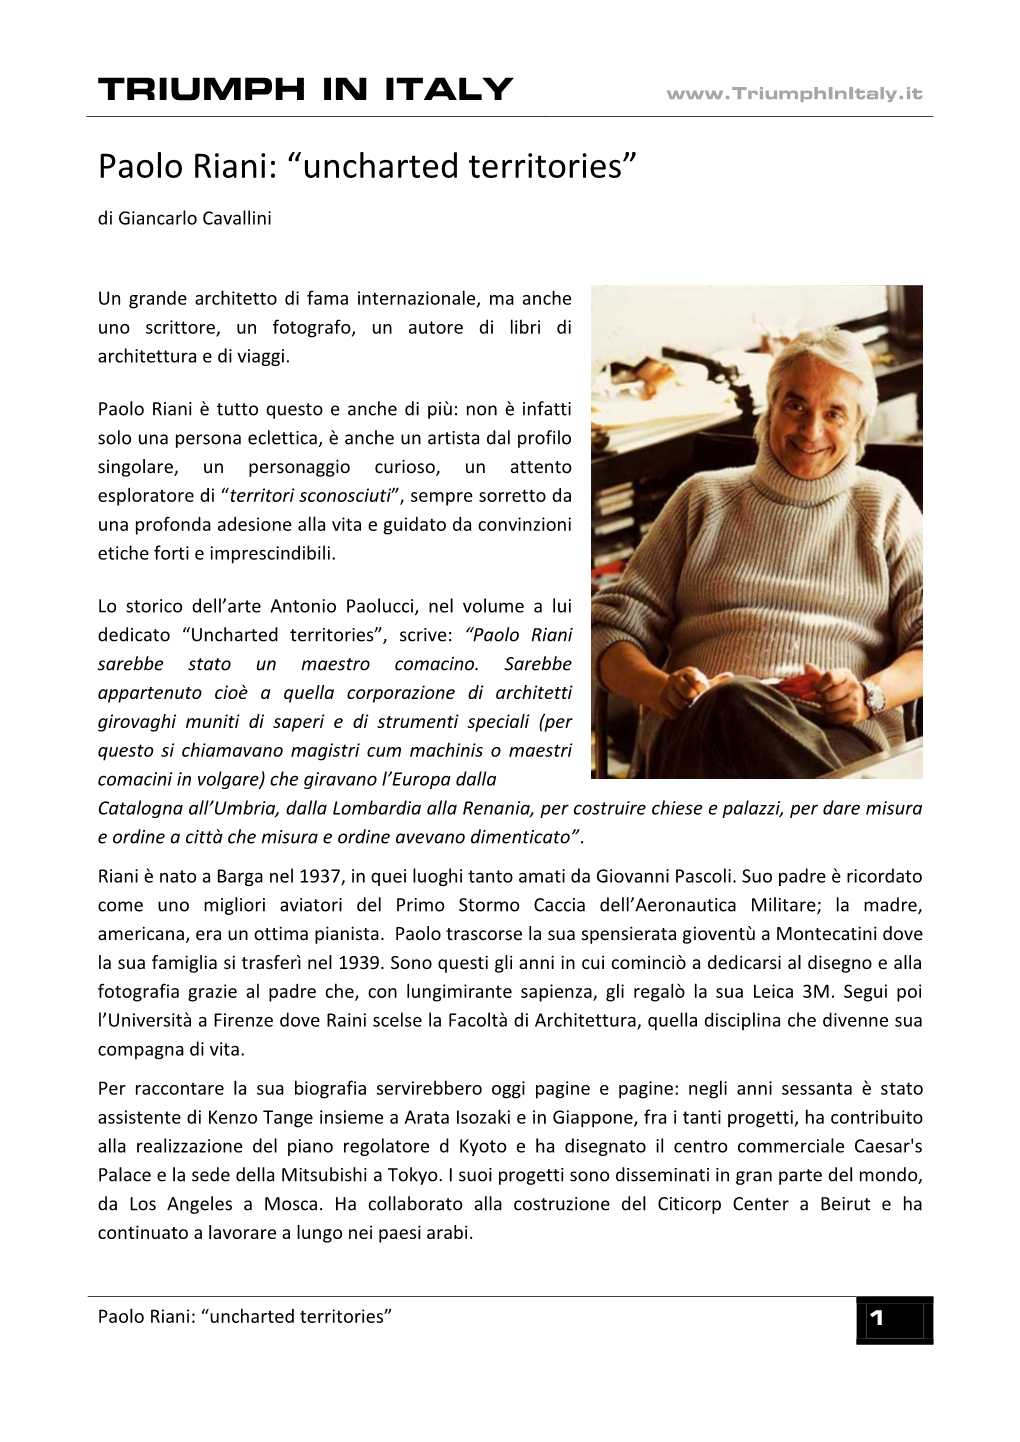 Paolo Riani: “Uncharted Territories” Di Giancarlo Cavallini